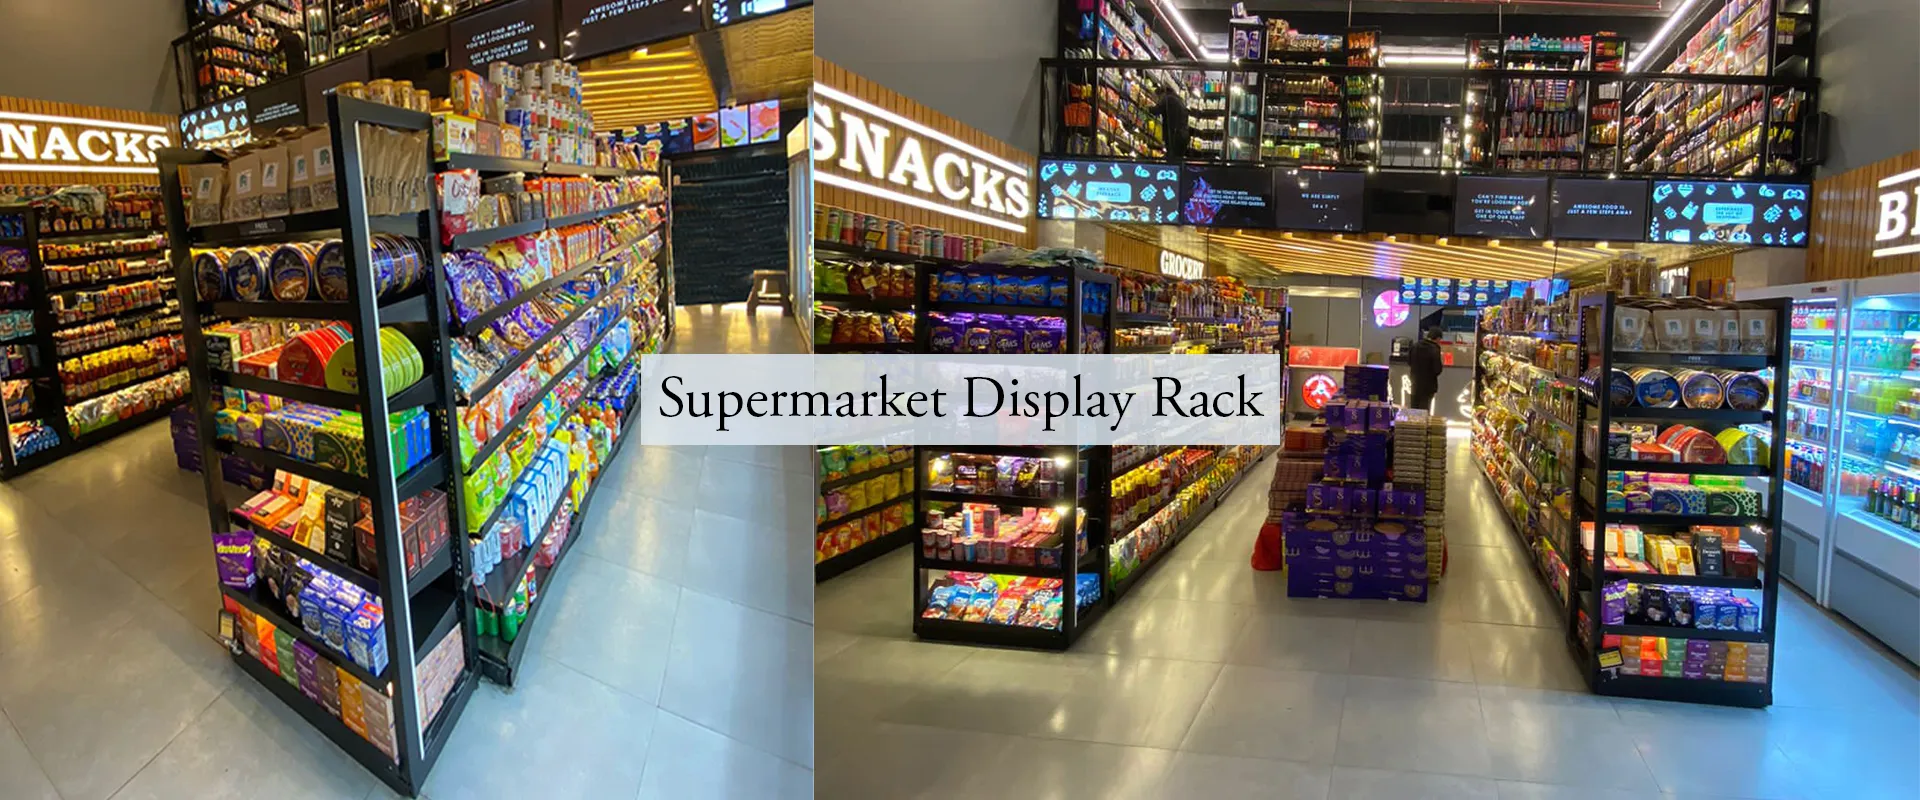 Supermarket Display Rack In Dera Bassi